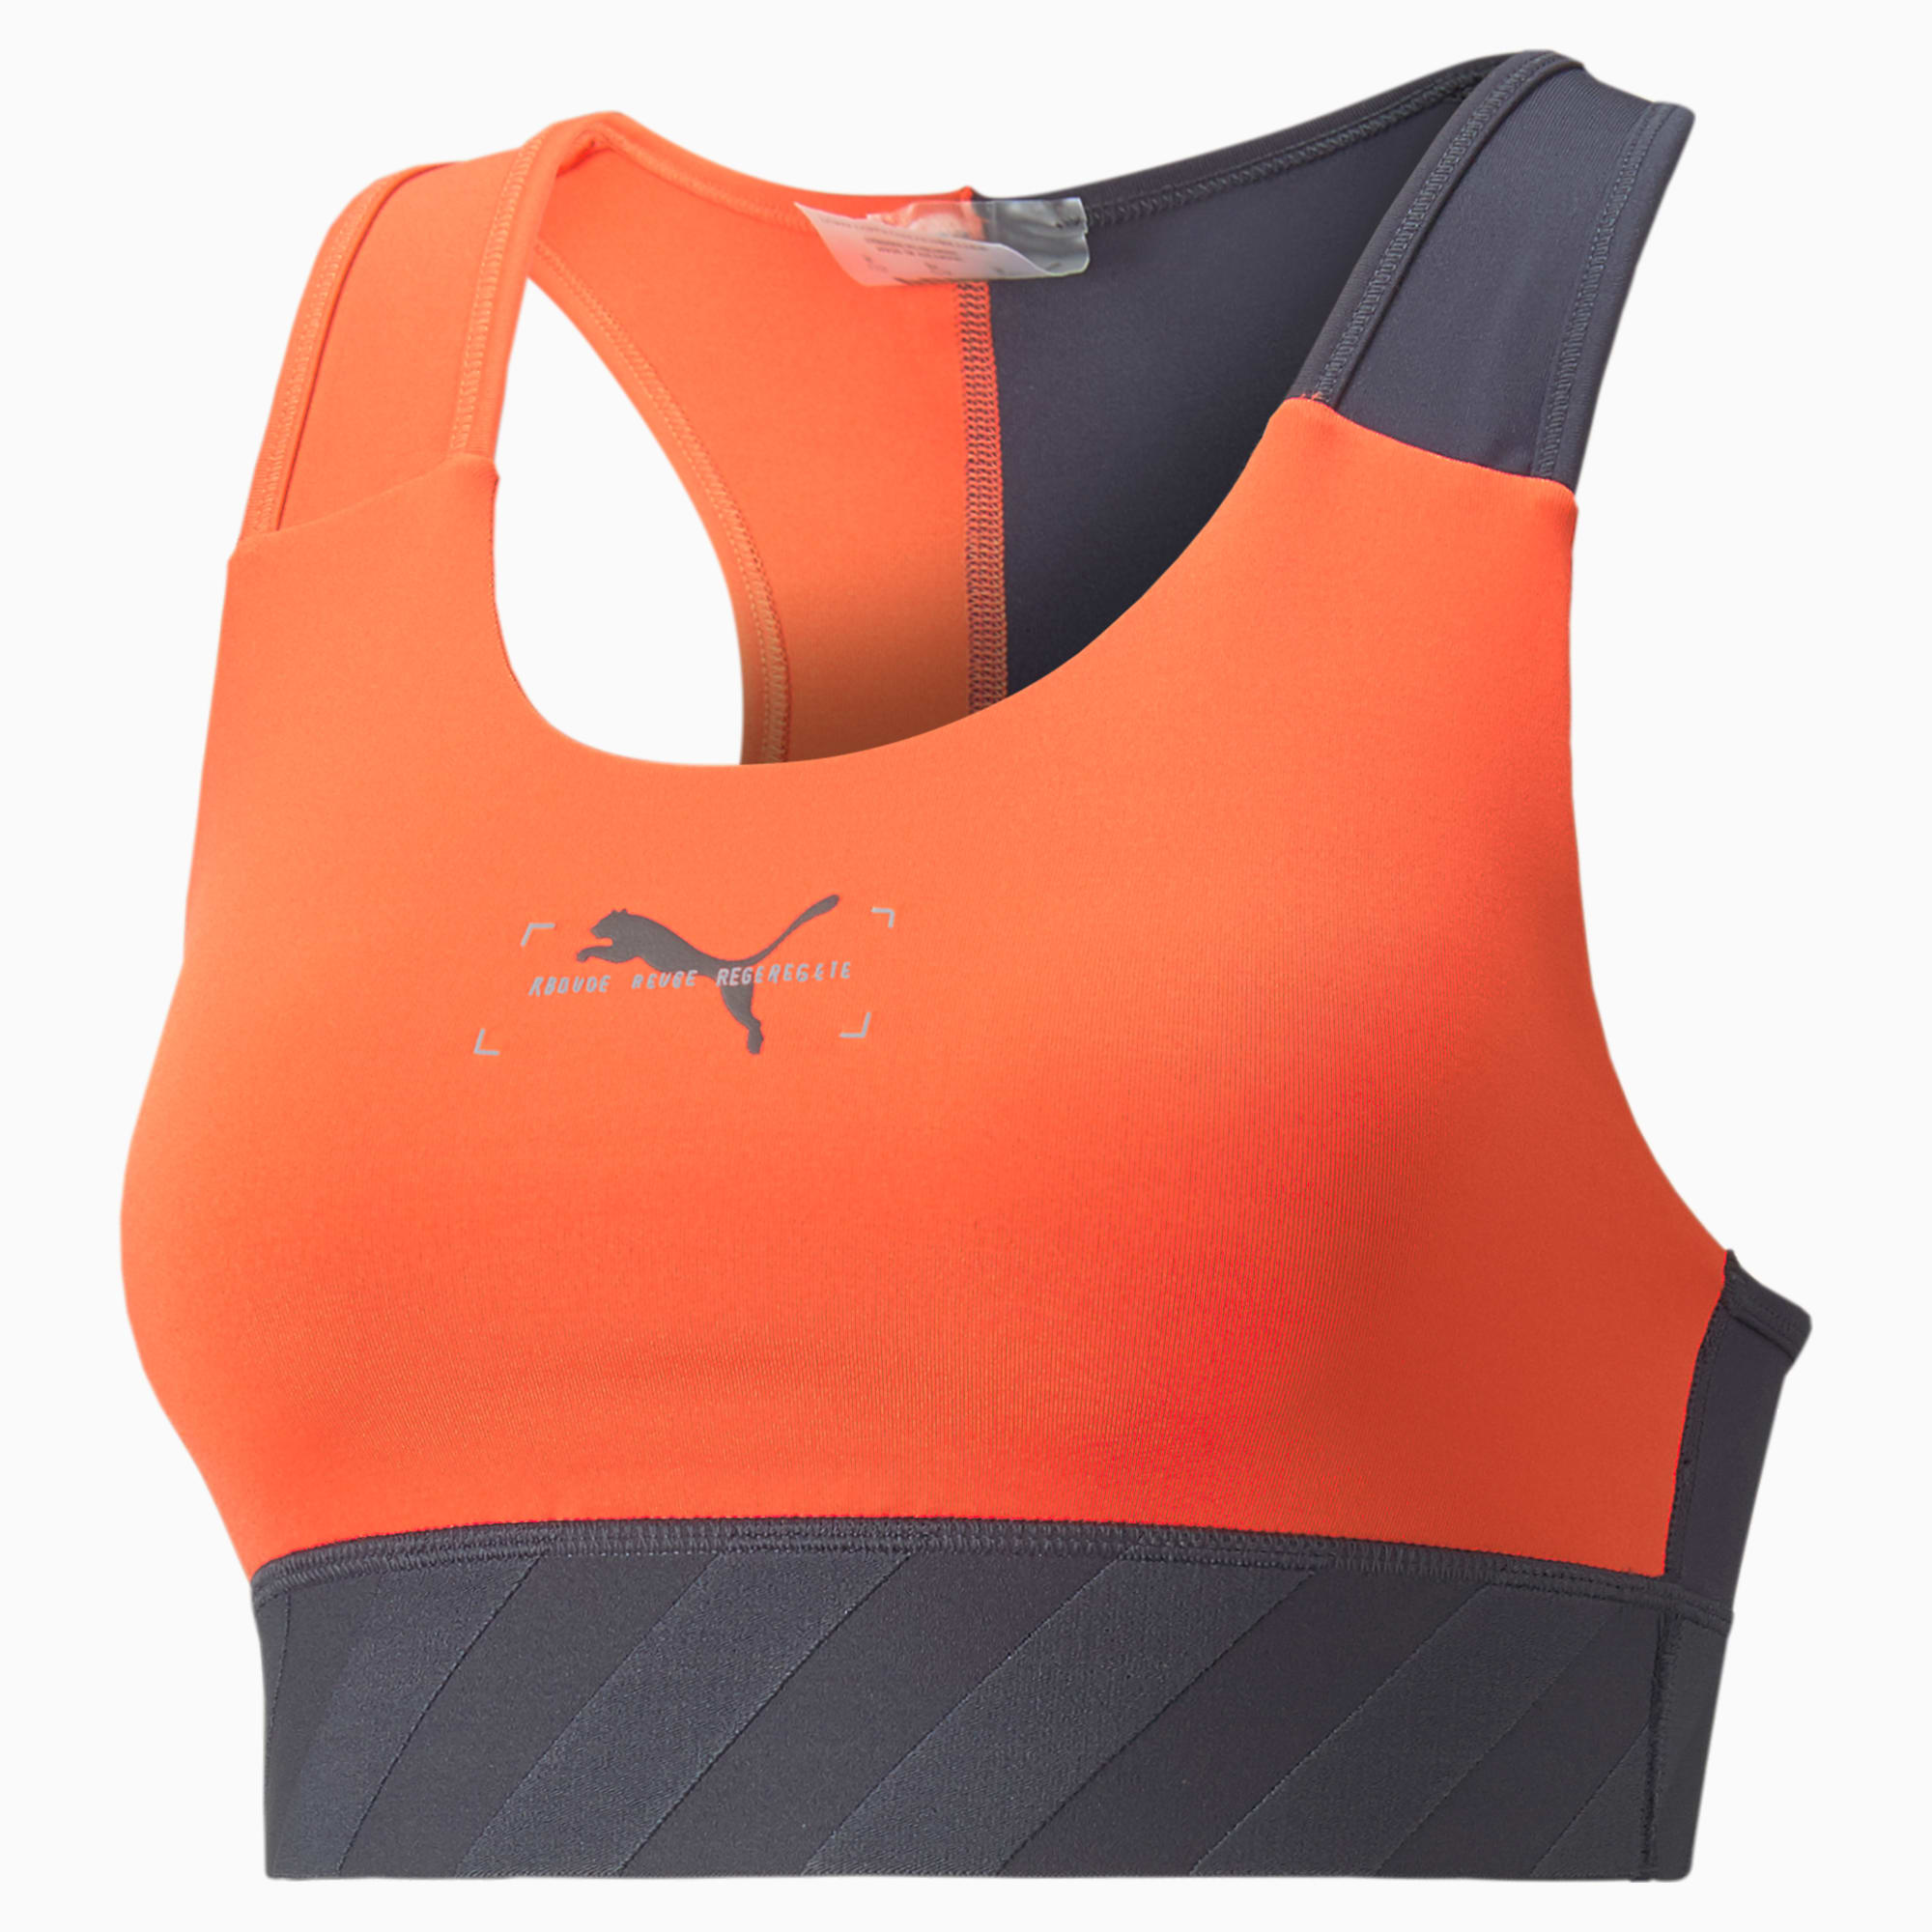 5/$25 SALE Puma logo sports bra large  Sports bra, Clothes design,  Athletic tank tops